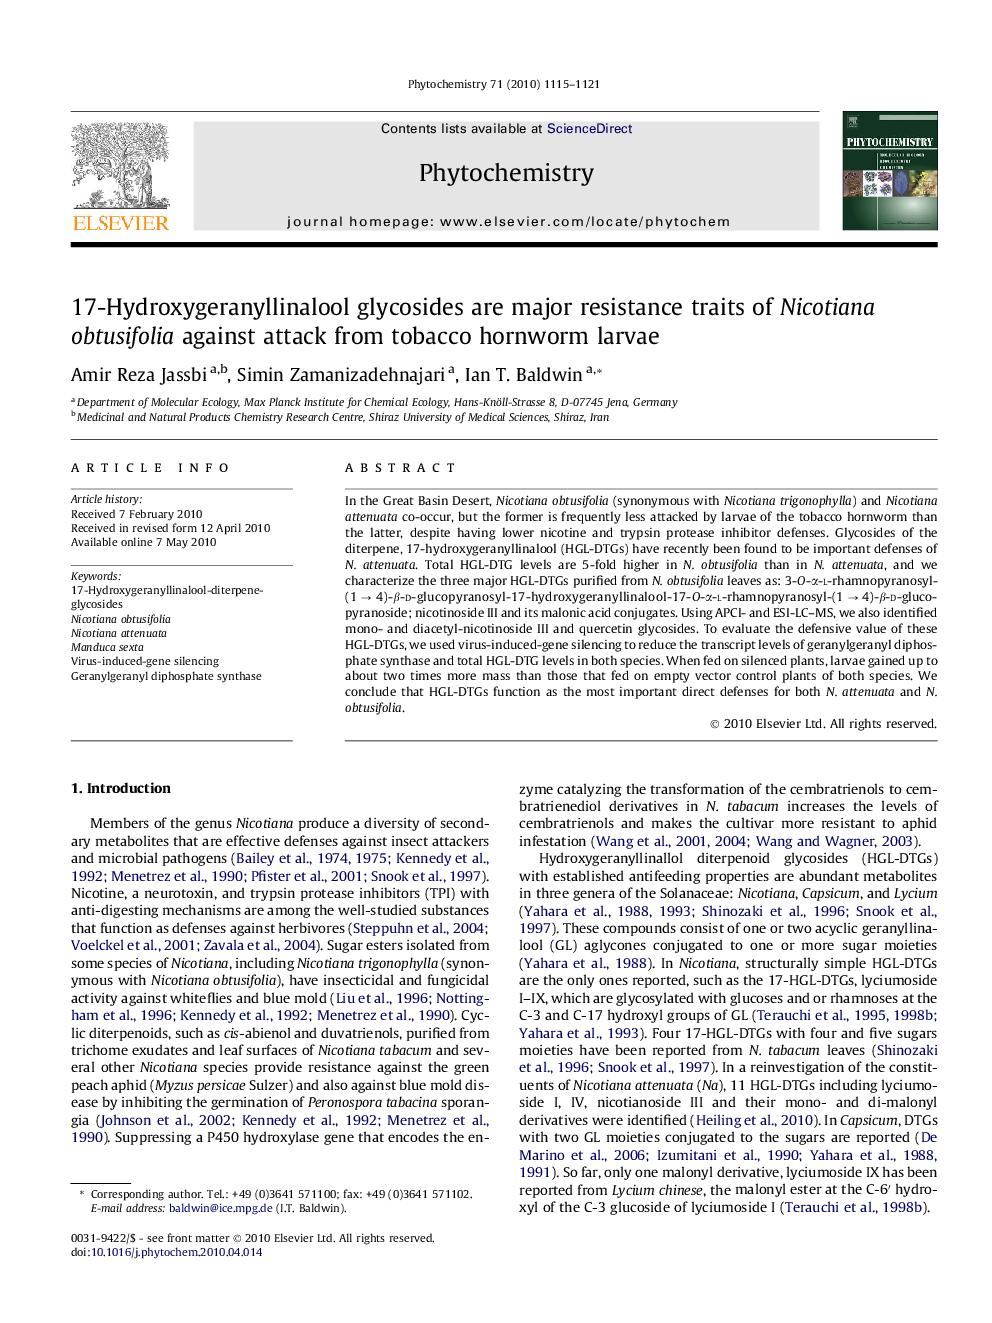 17-Hydroxygeranyllinalool glycosides are major resistance traits of Nicotiana obtusifolia against attack from tobacco hornworm larvae